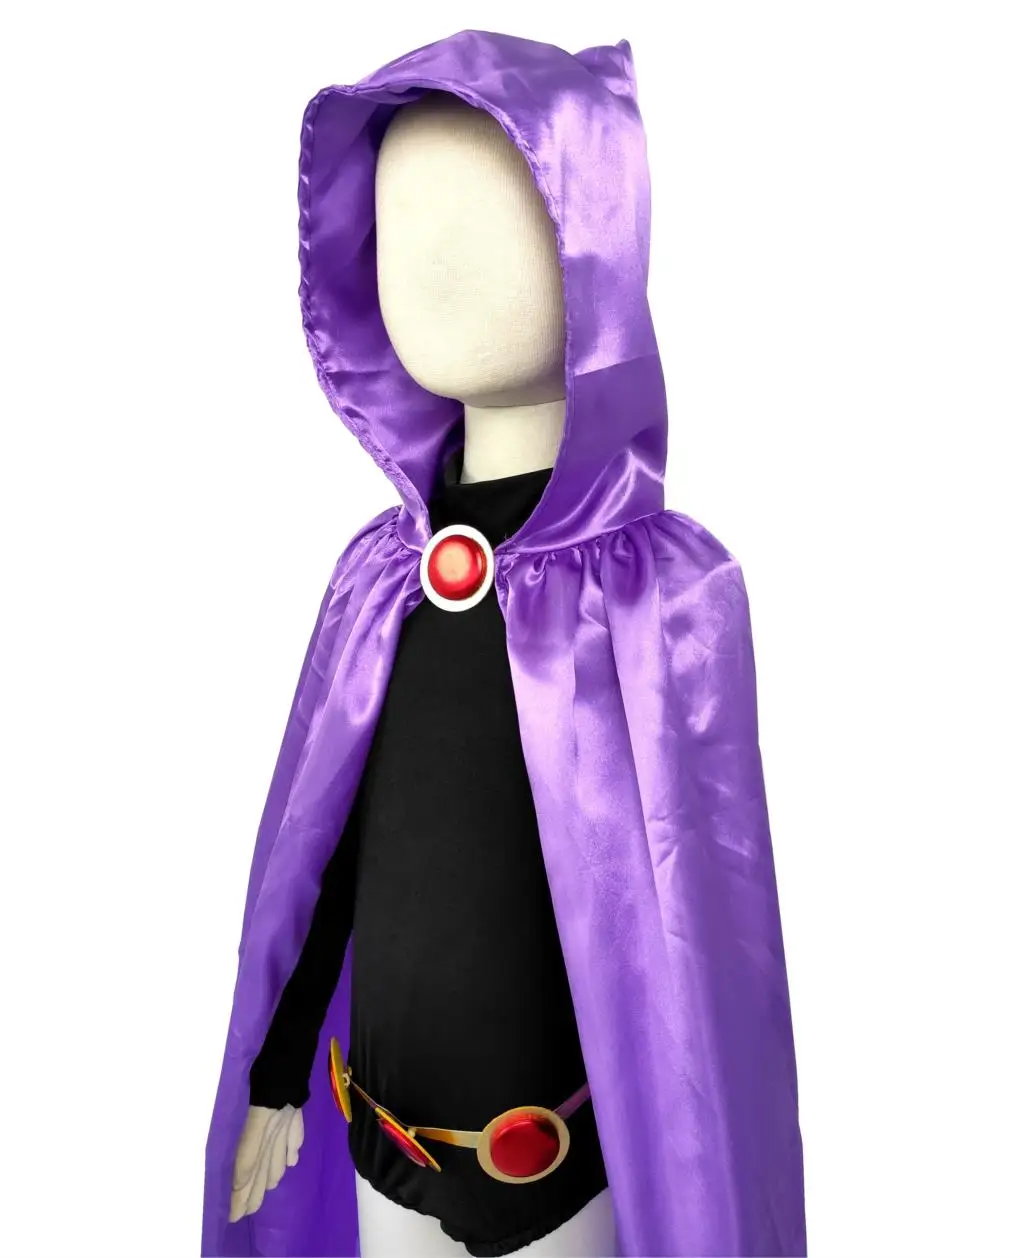 deluxe teen titan raven costume for cosplay halloween 4pcs1set halloween costume kidsadult szie free global shipping